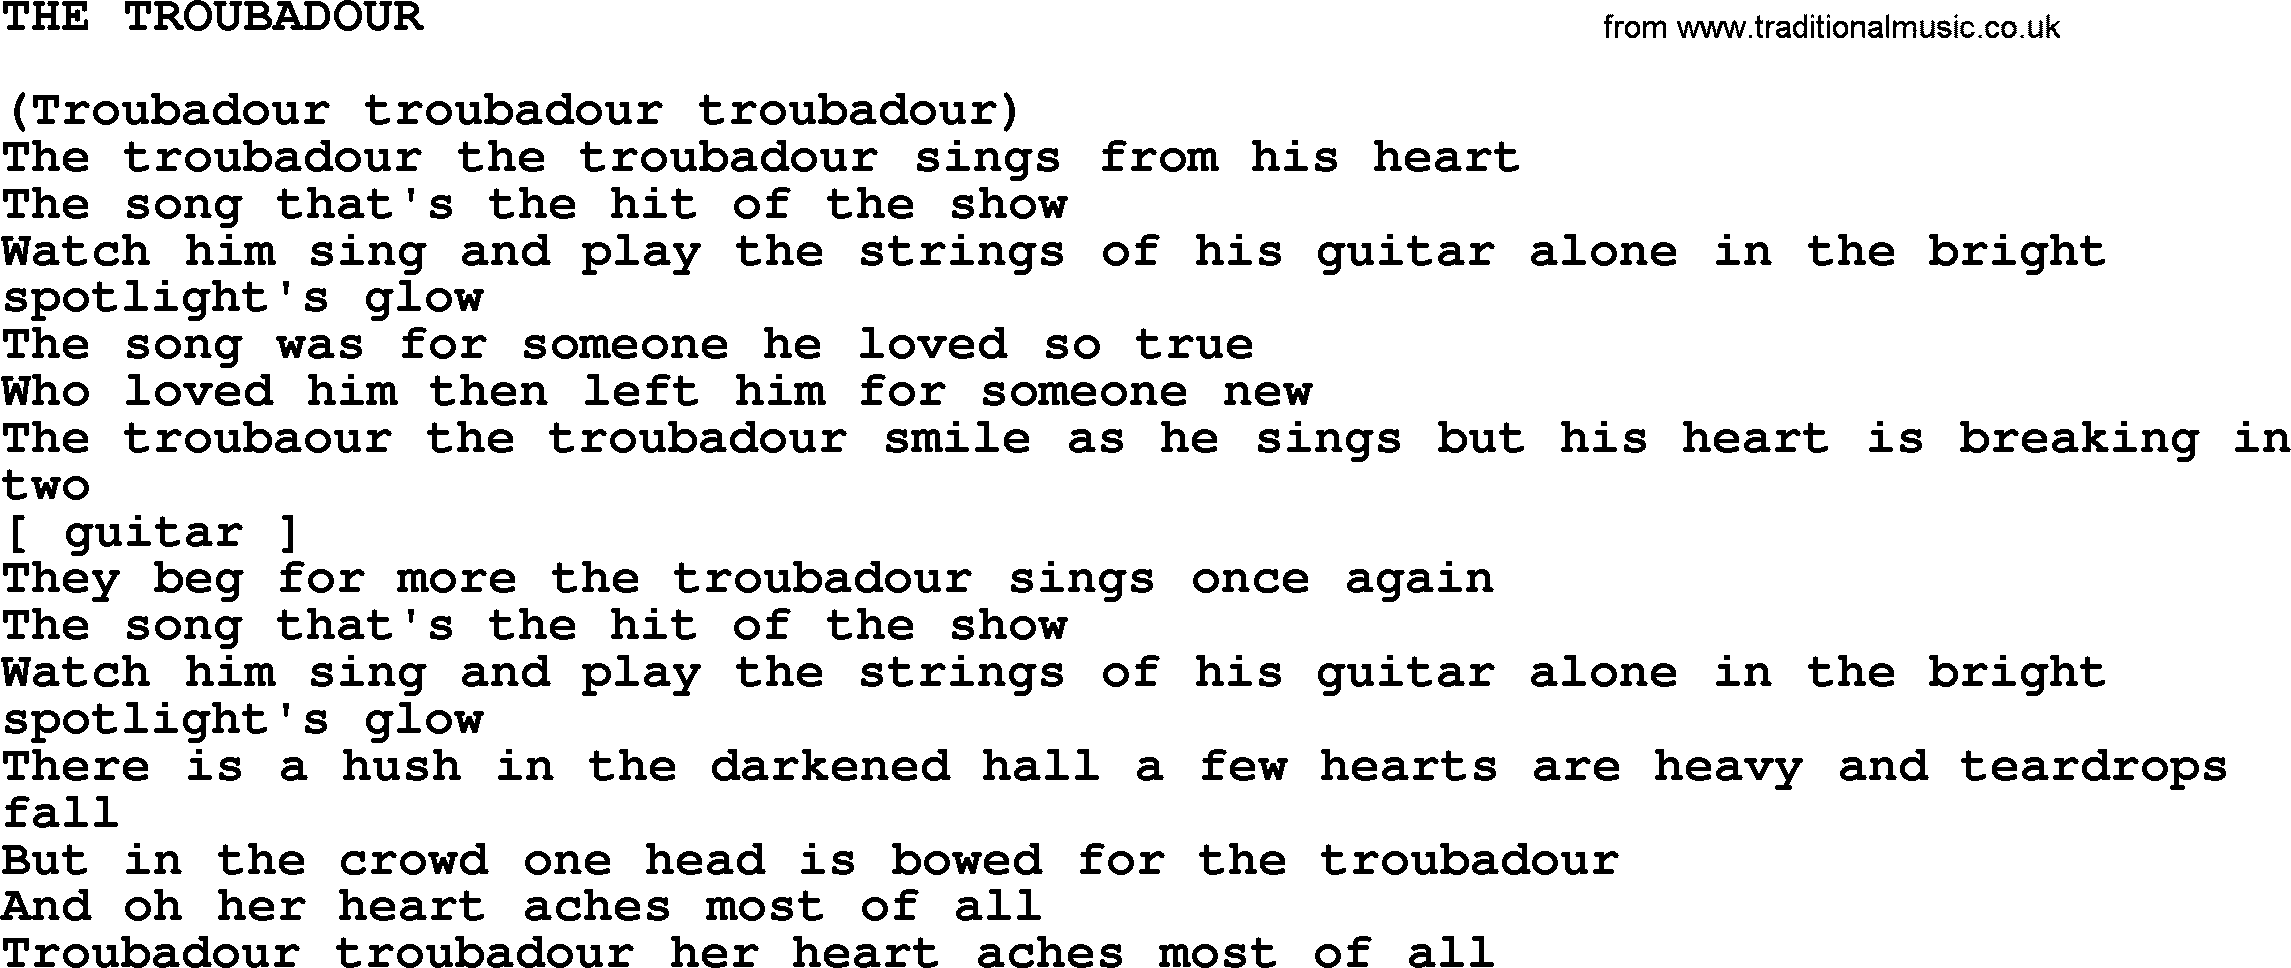 Johnny Cash song The Troubadour.txt lyrics